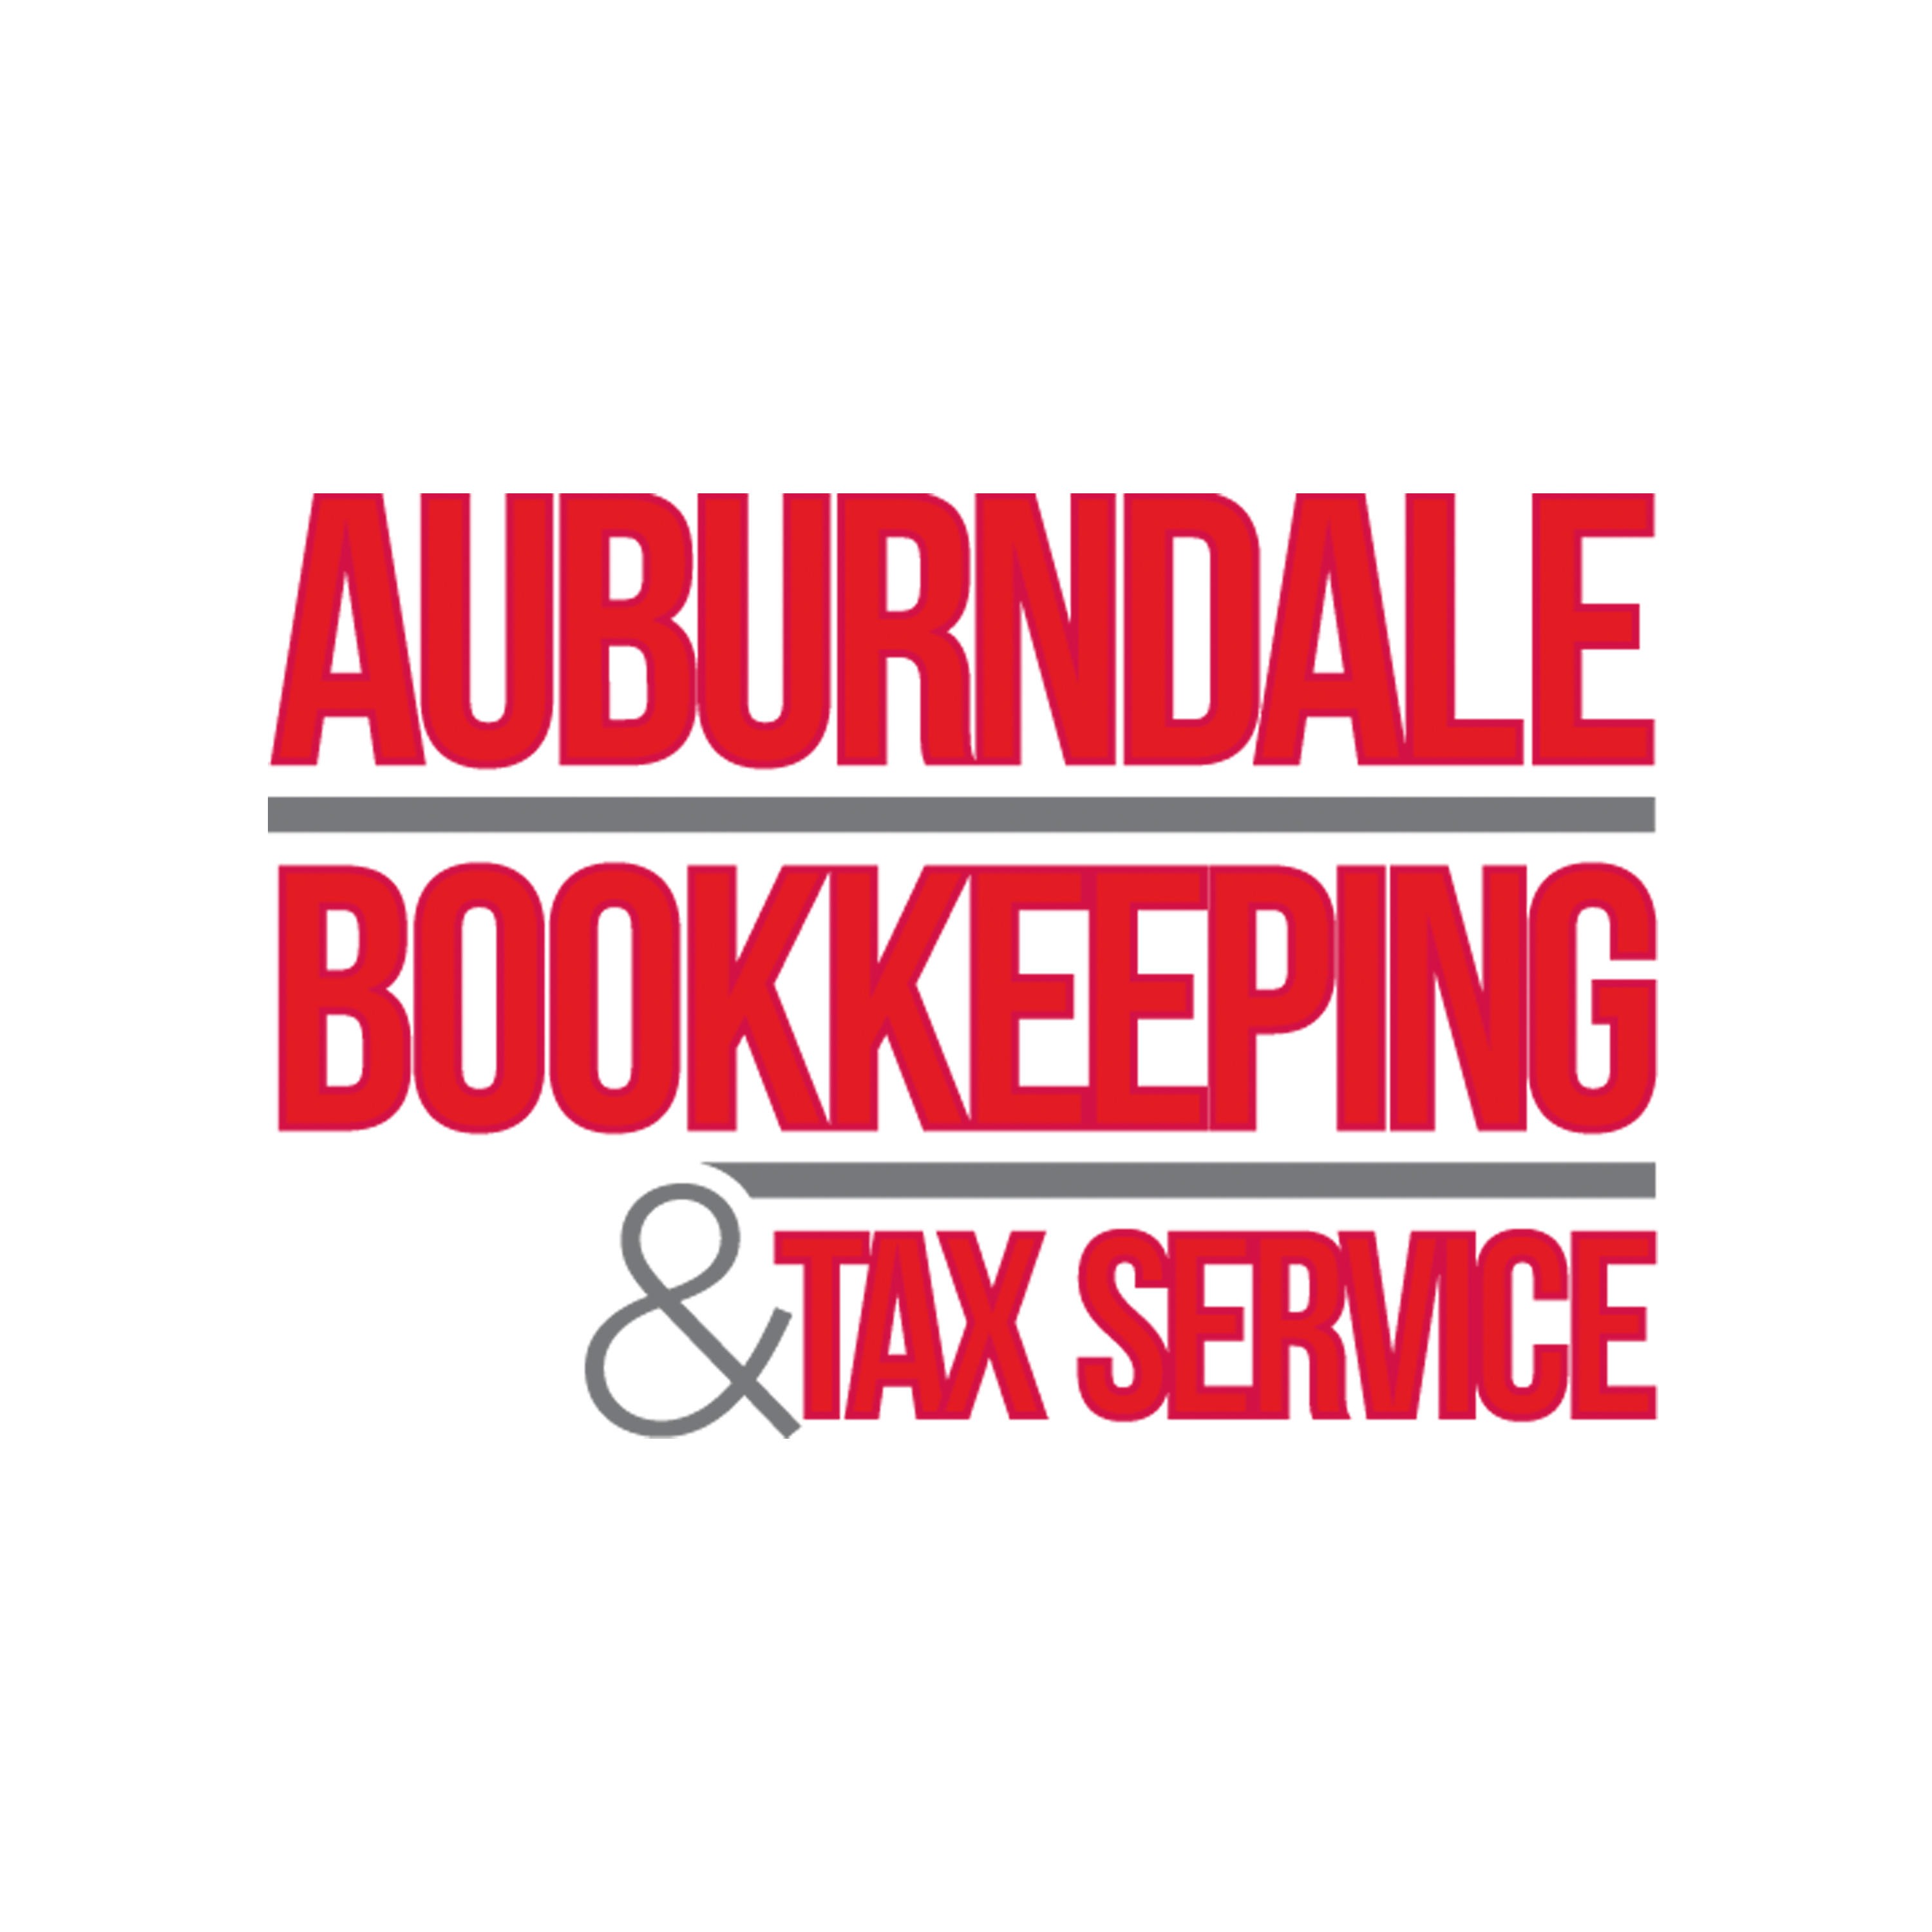 Auburndale Bookkeeping & Tax Service